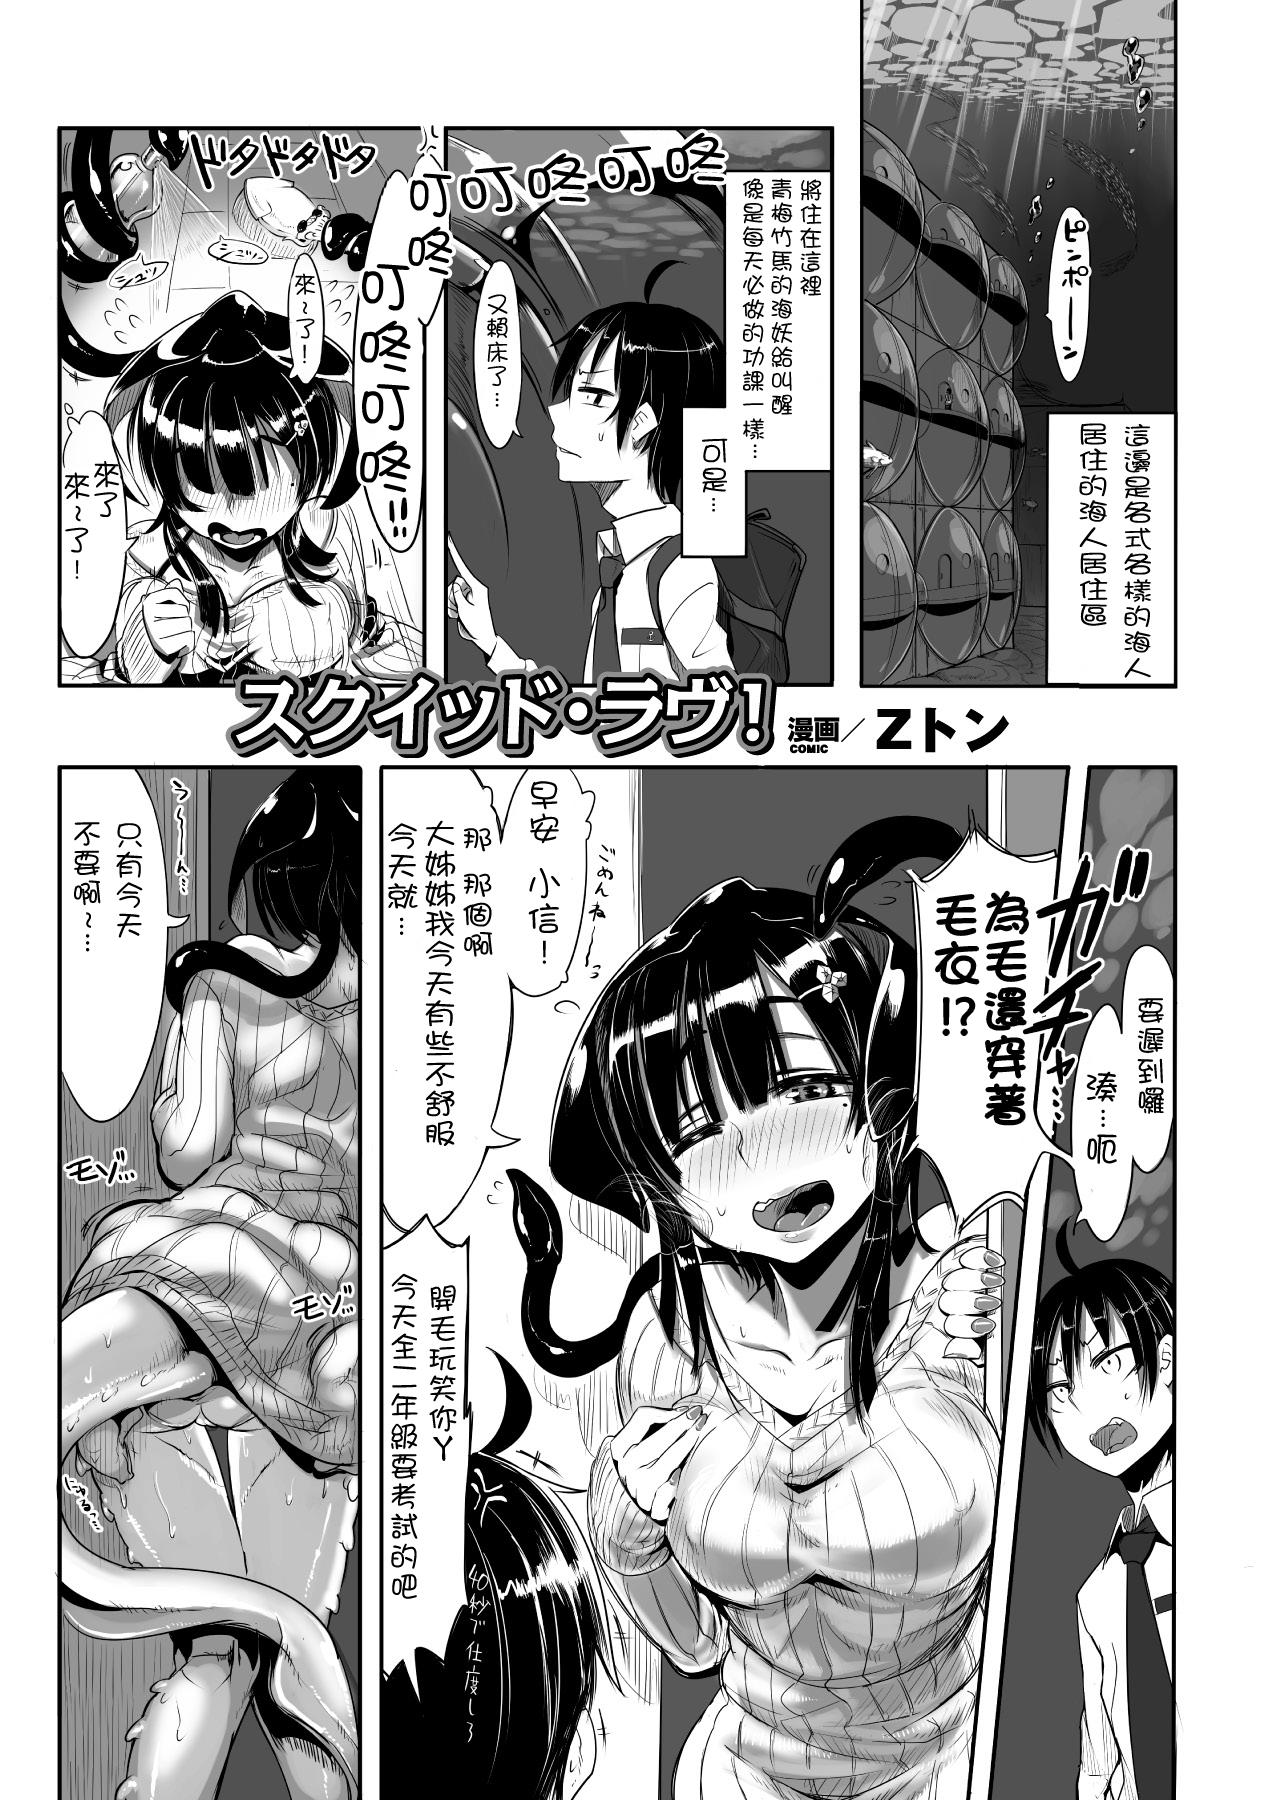 Bessatsu Comic Unreal Monster Musume Paradise Vol. 4 7